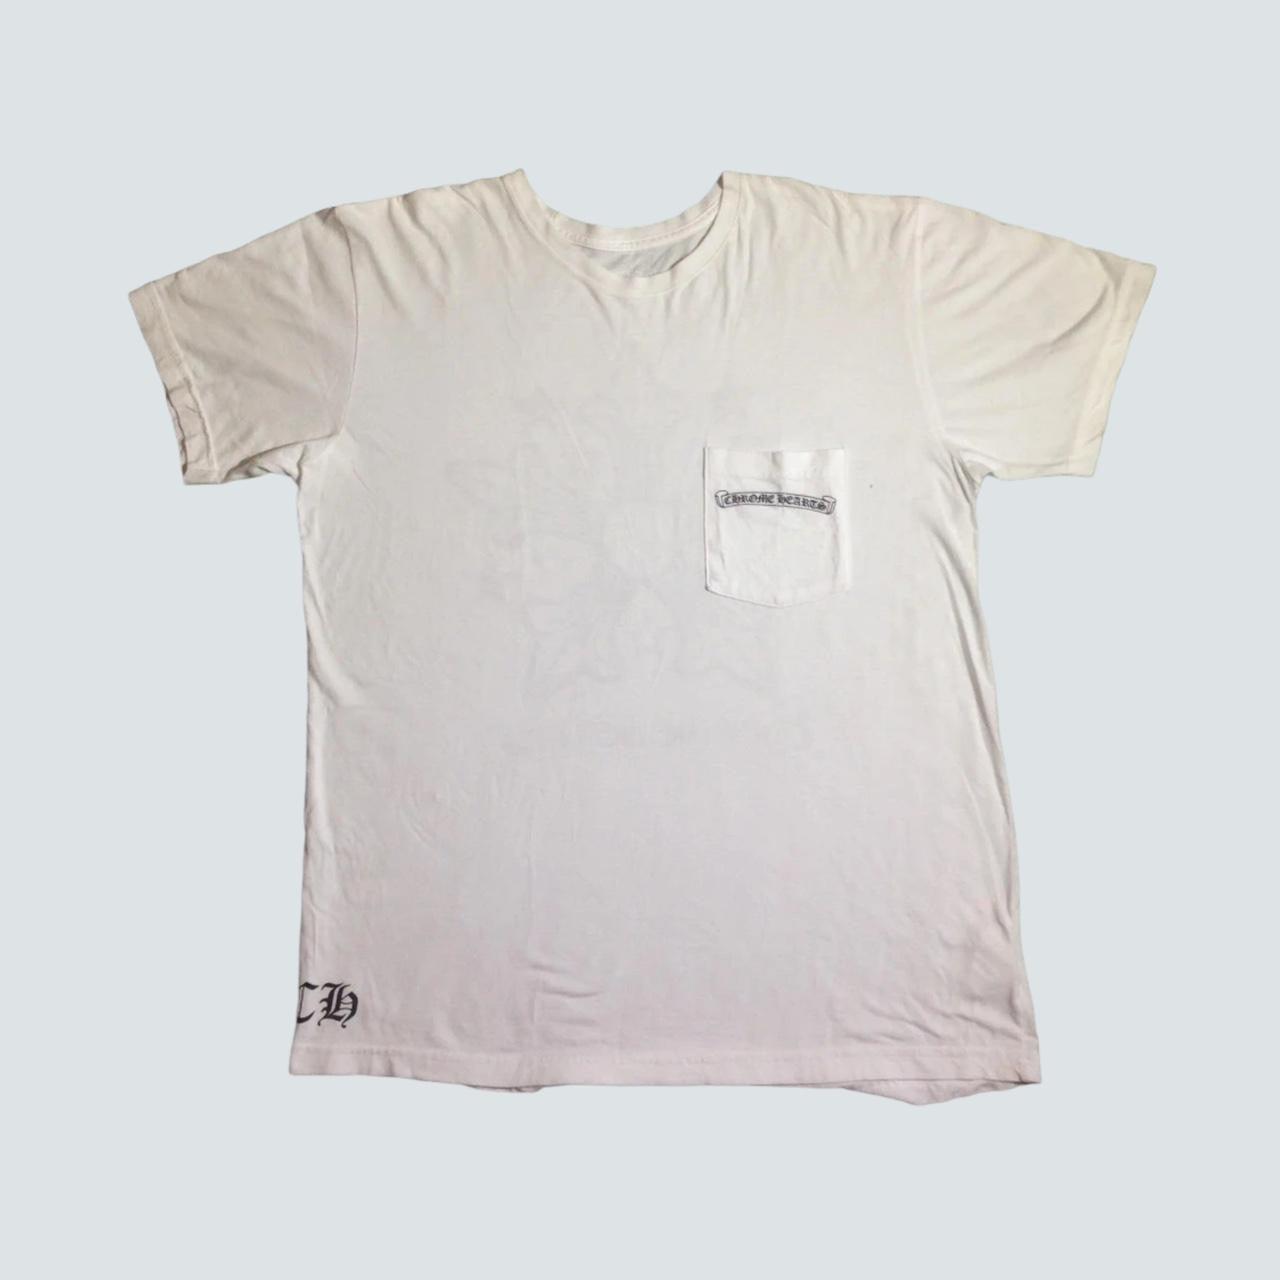 White Chrome Hearts Star Pocket T shirt (L) - Known Source